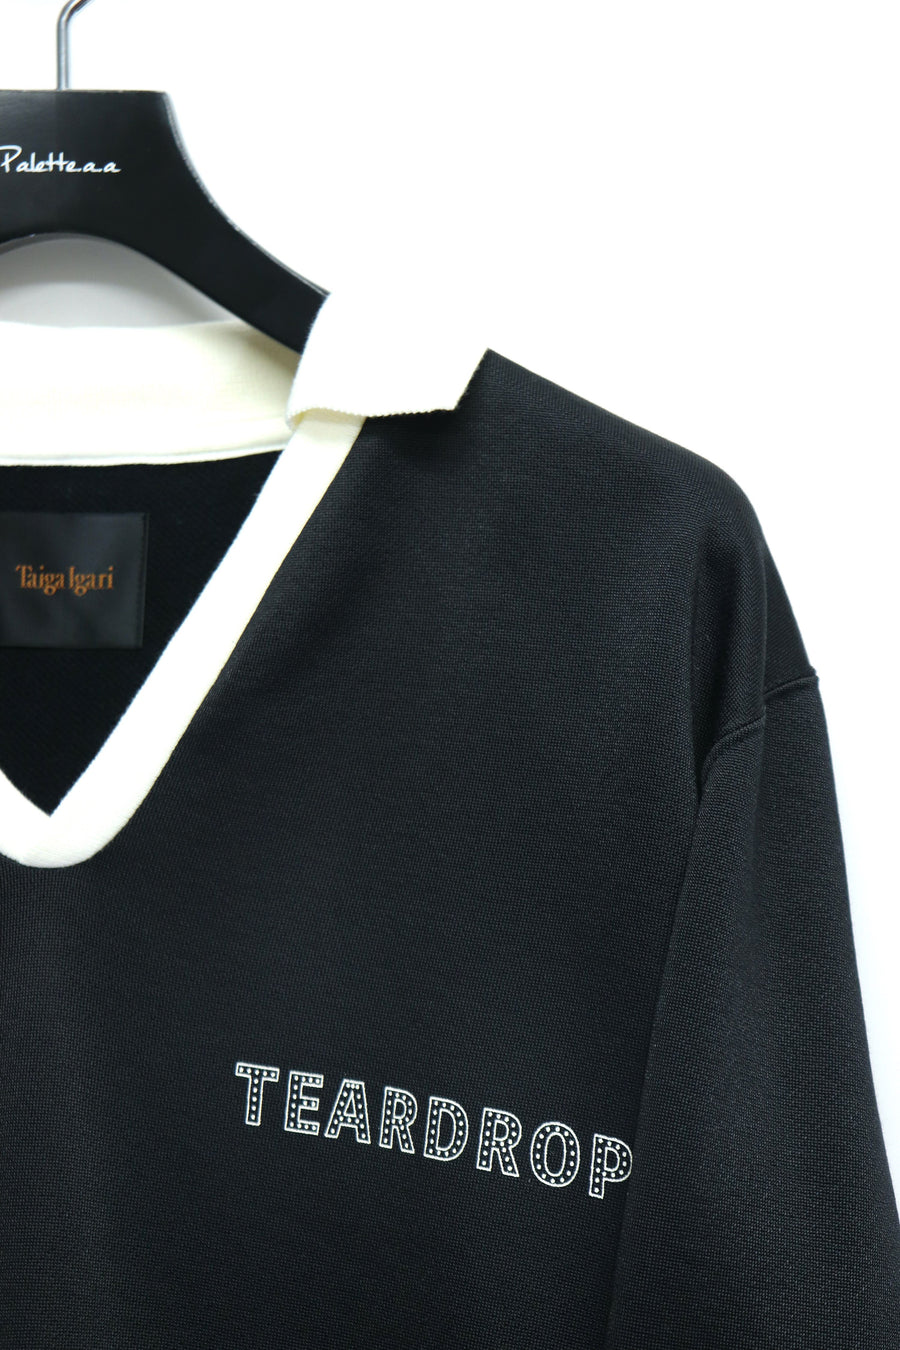 Taiga Igari  Two-Tone Racing Shirt(BLACK  OFF WHITE)